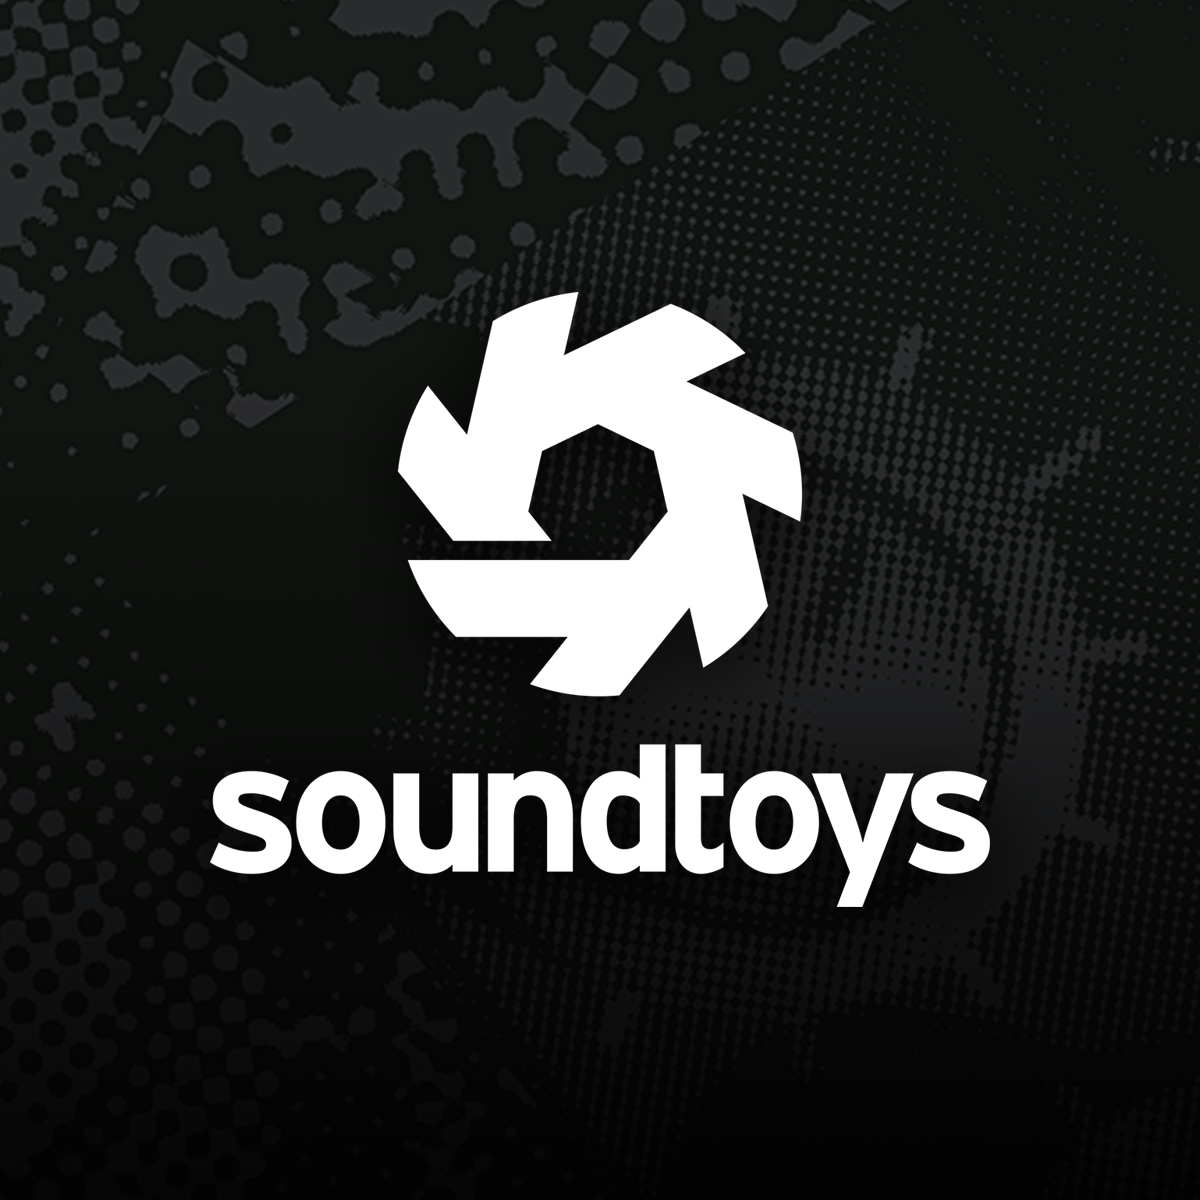 SoundToys 2020 Full Crack